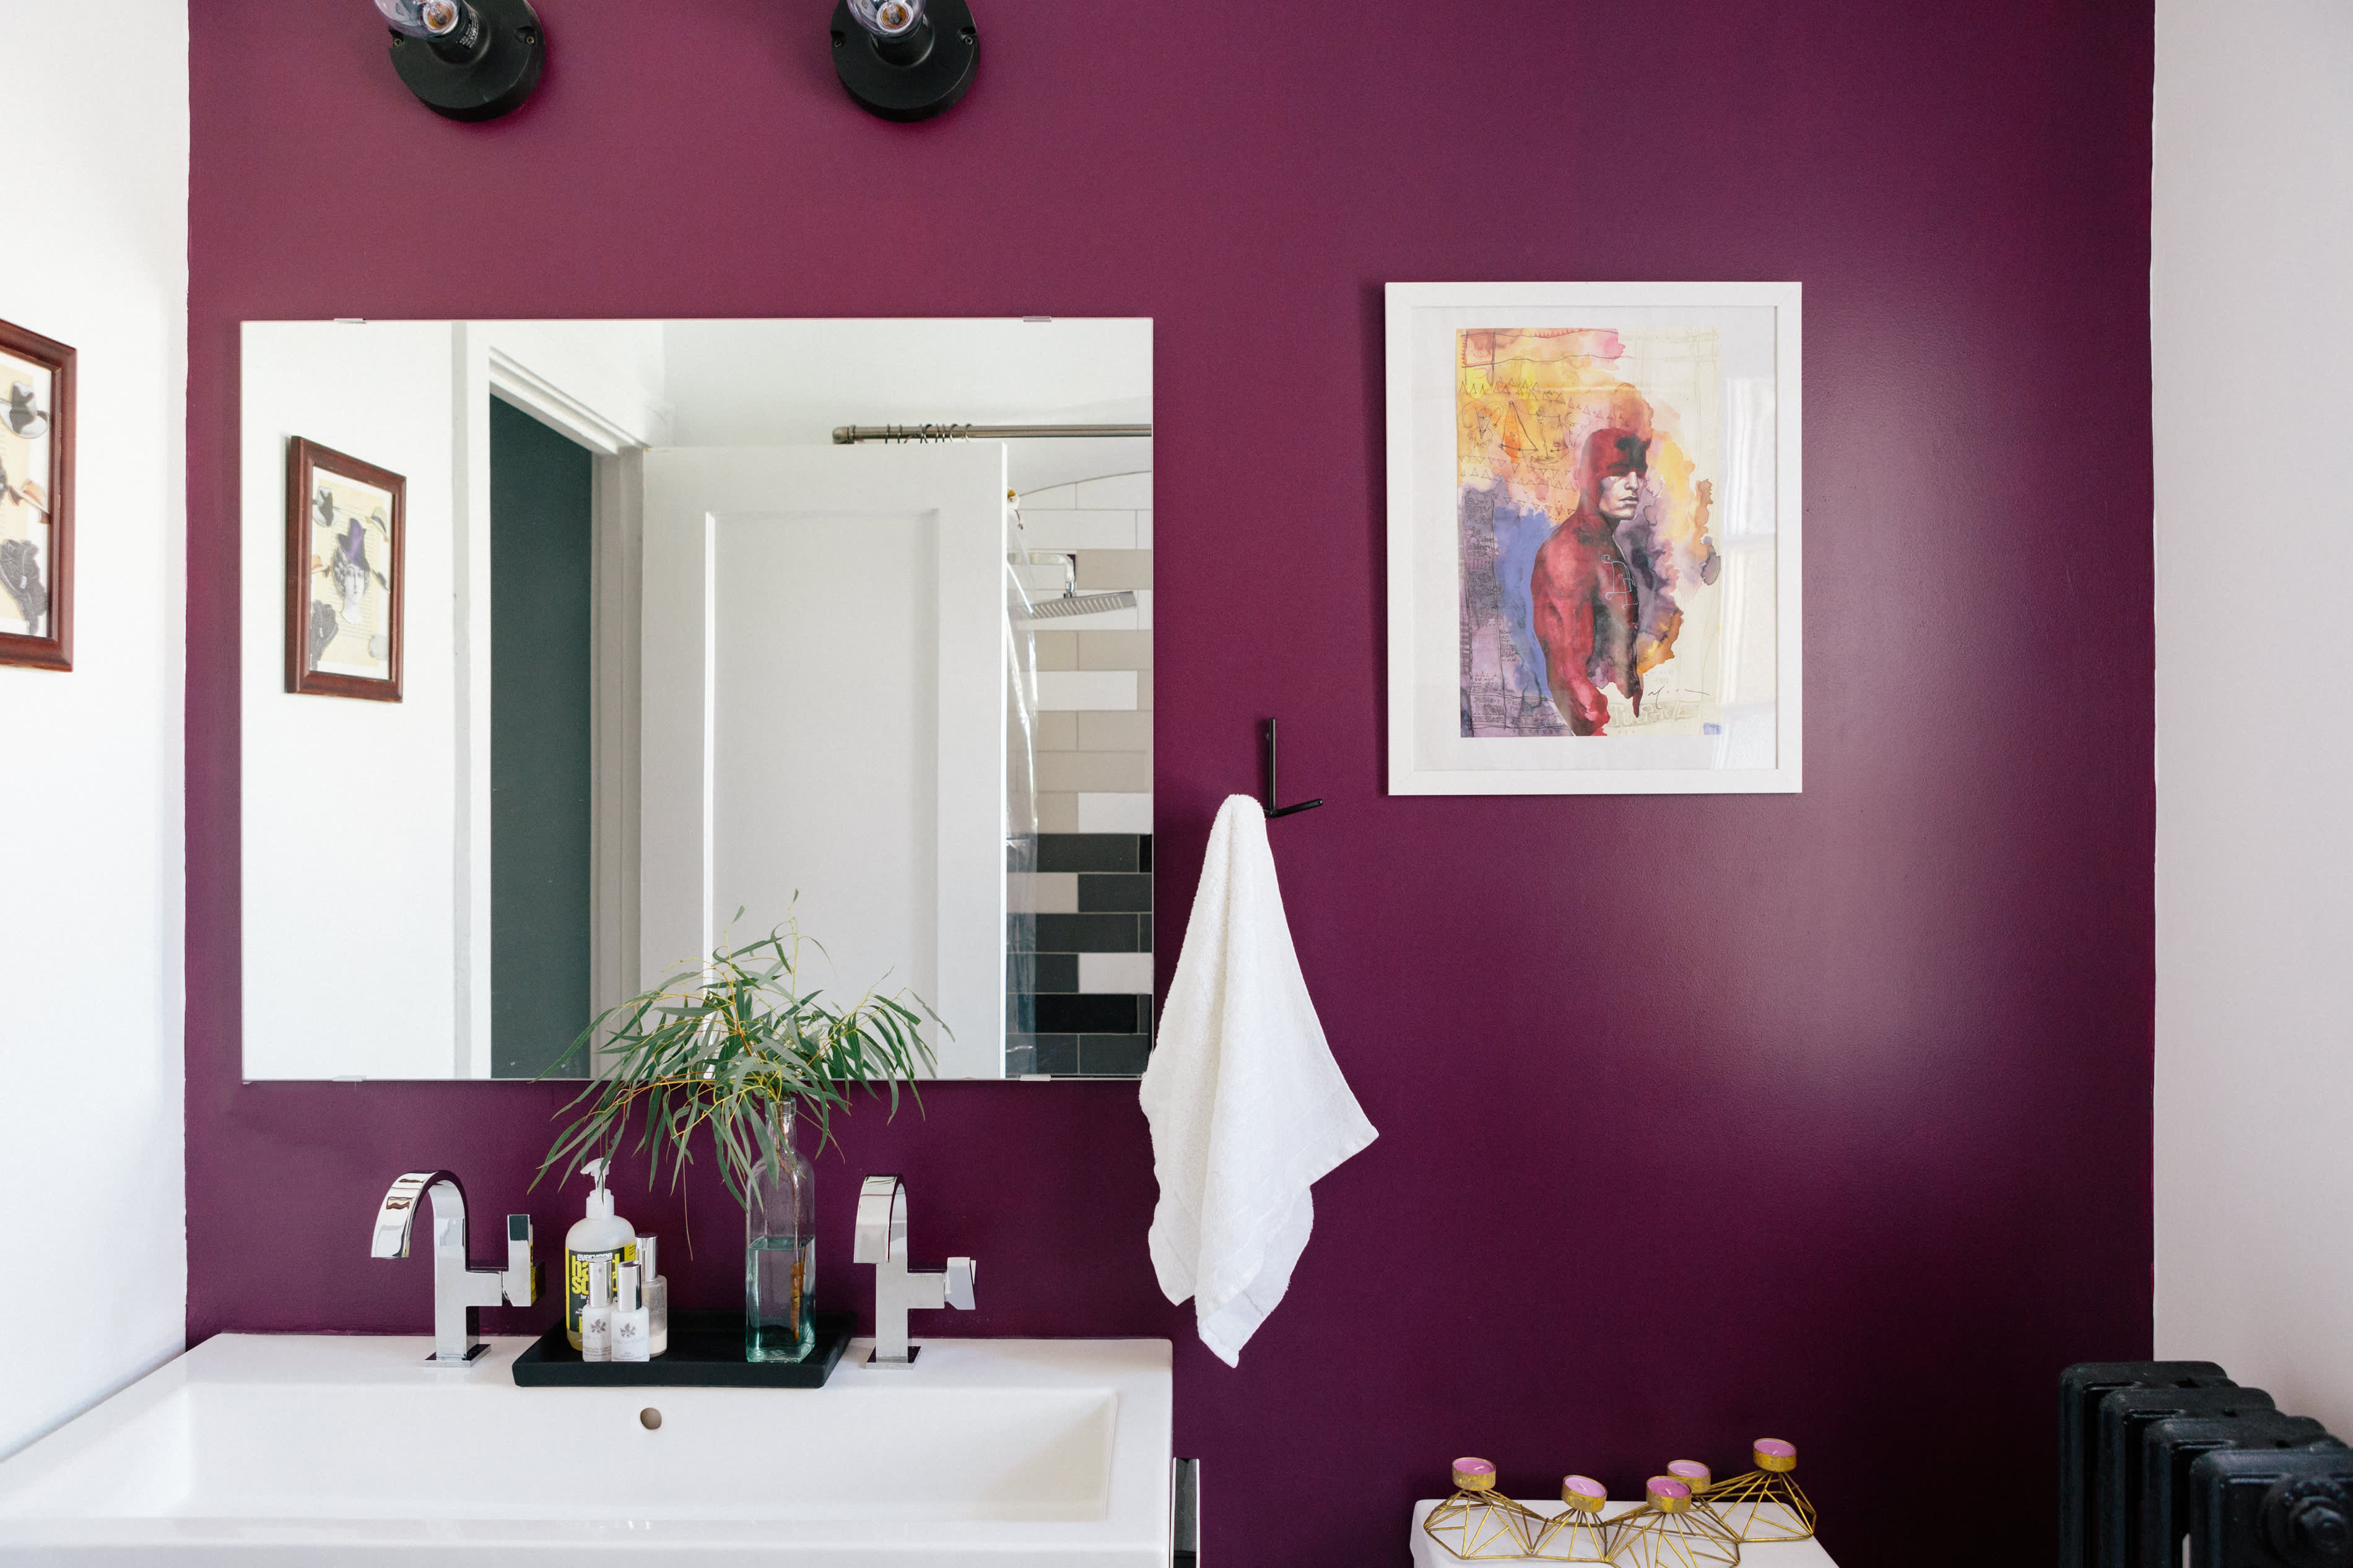 TikTok User in NYC Finds Secret Apartment Behind Bathroom Mirror